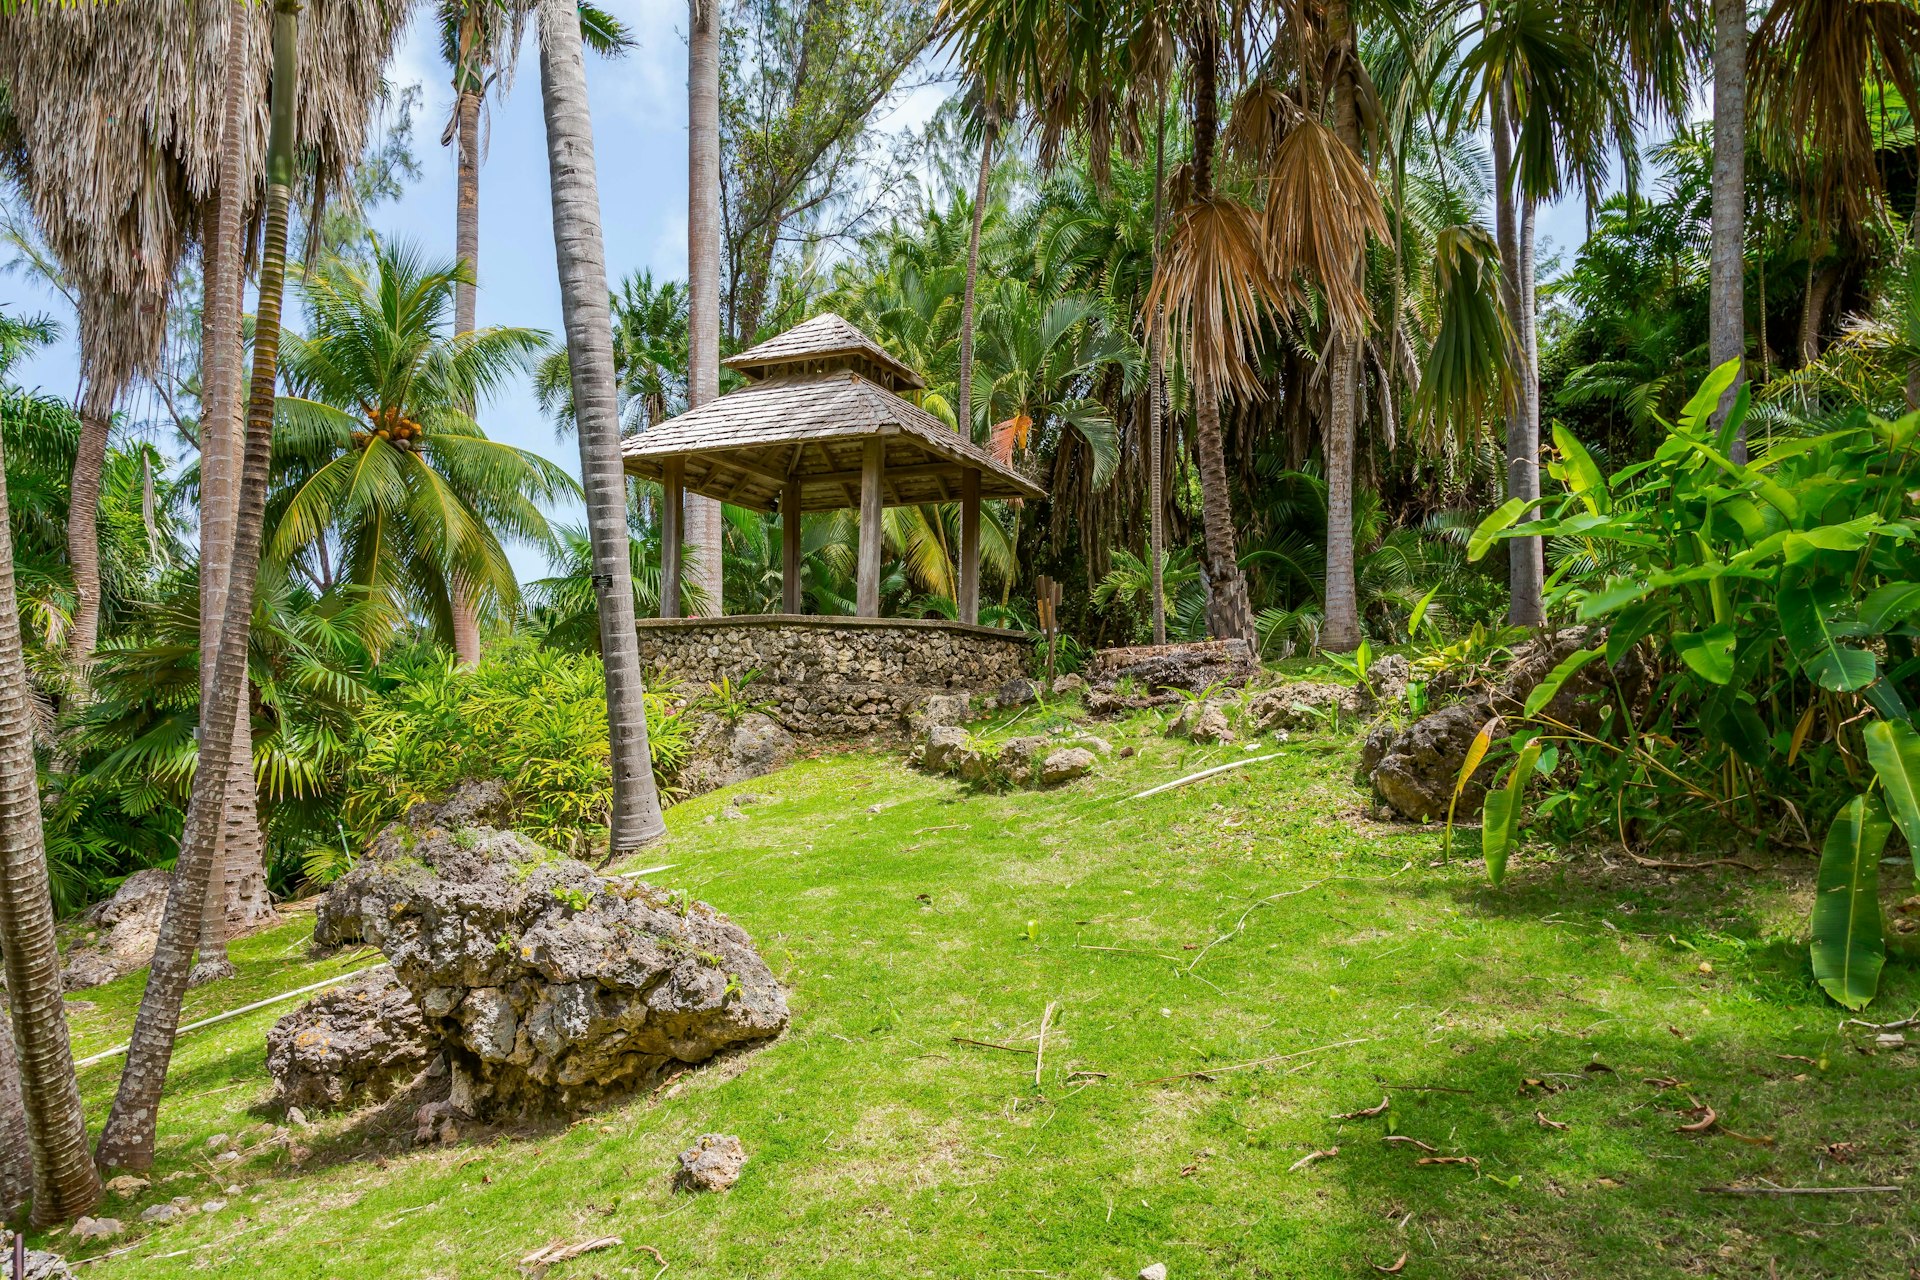 A pagoda sits on top of a steep rock-and-grass bank amid palm trees at Andromeda Botanic Gardens, Barbados